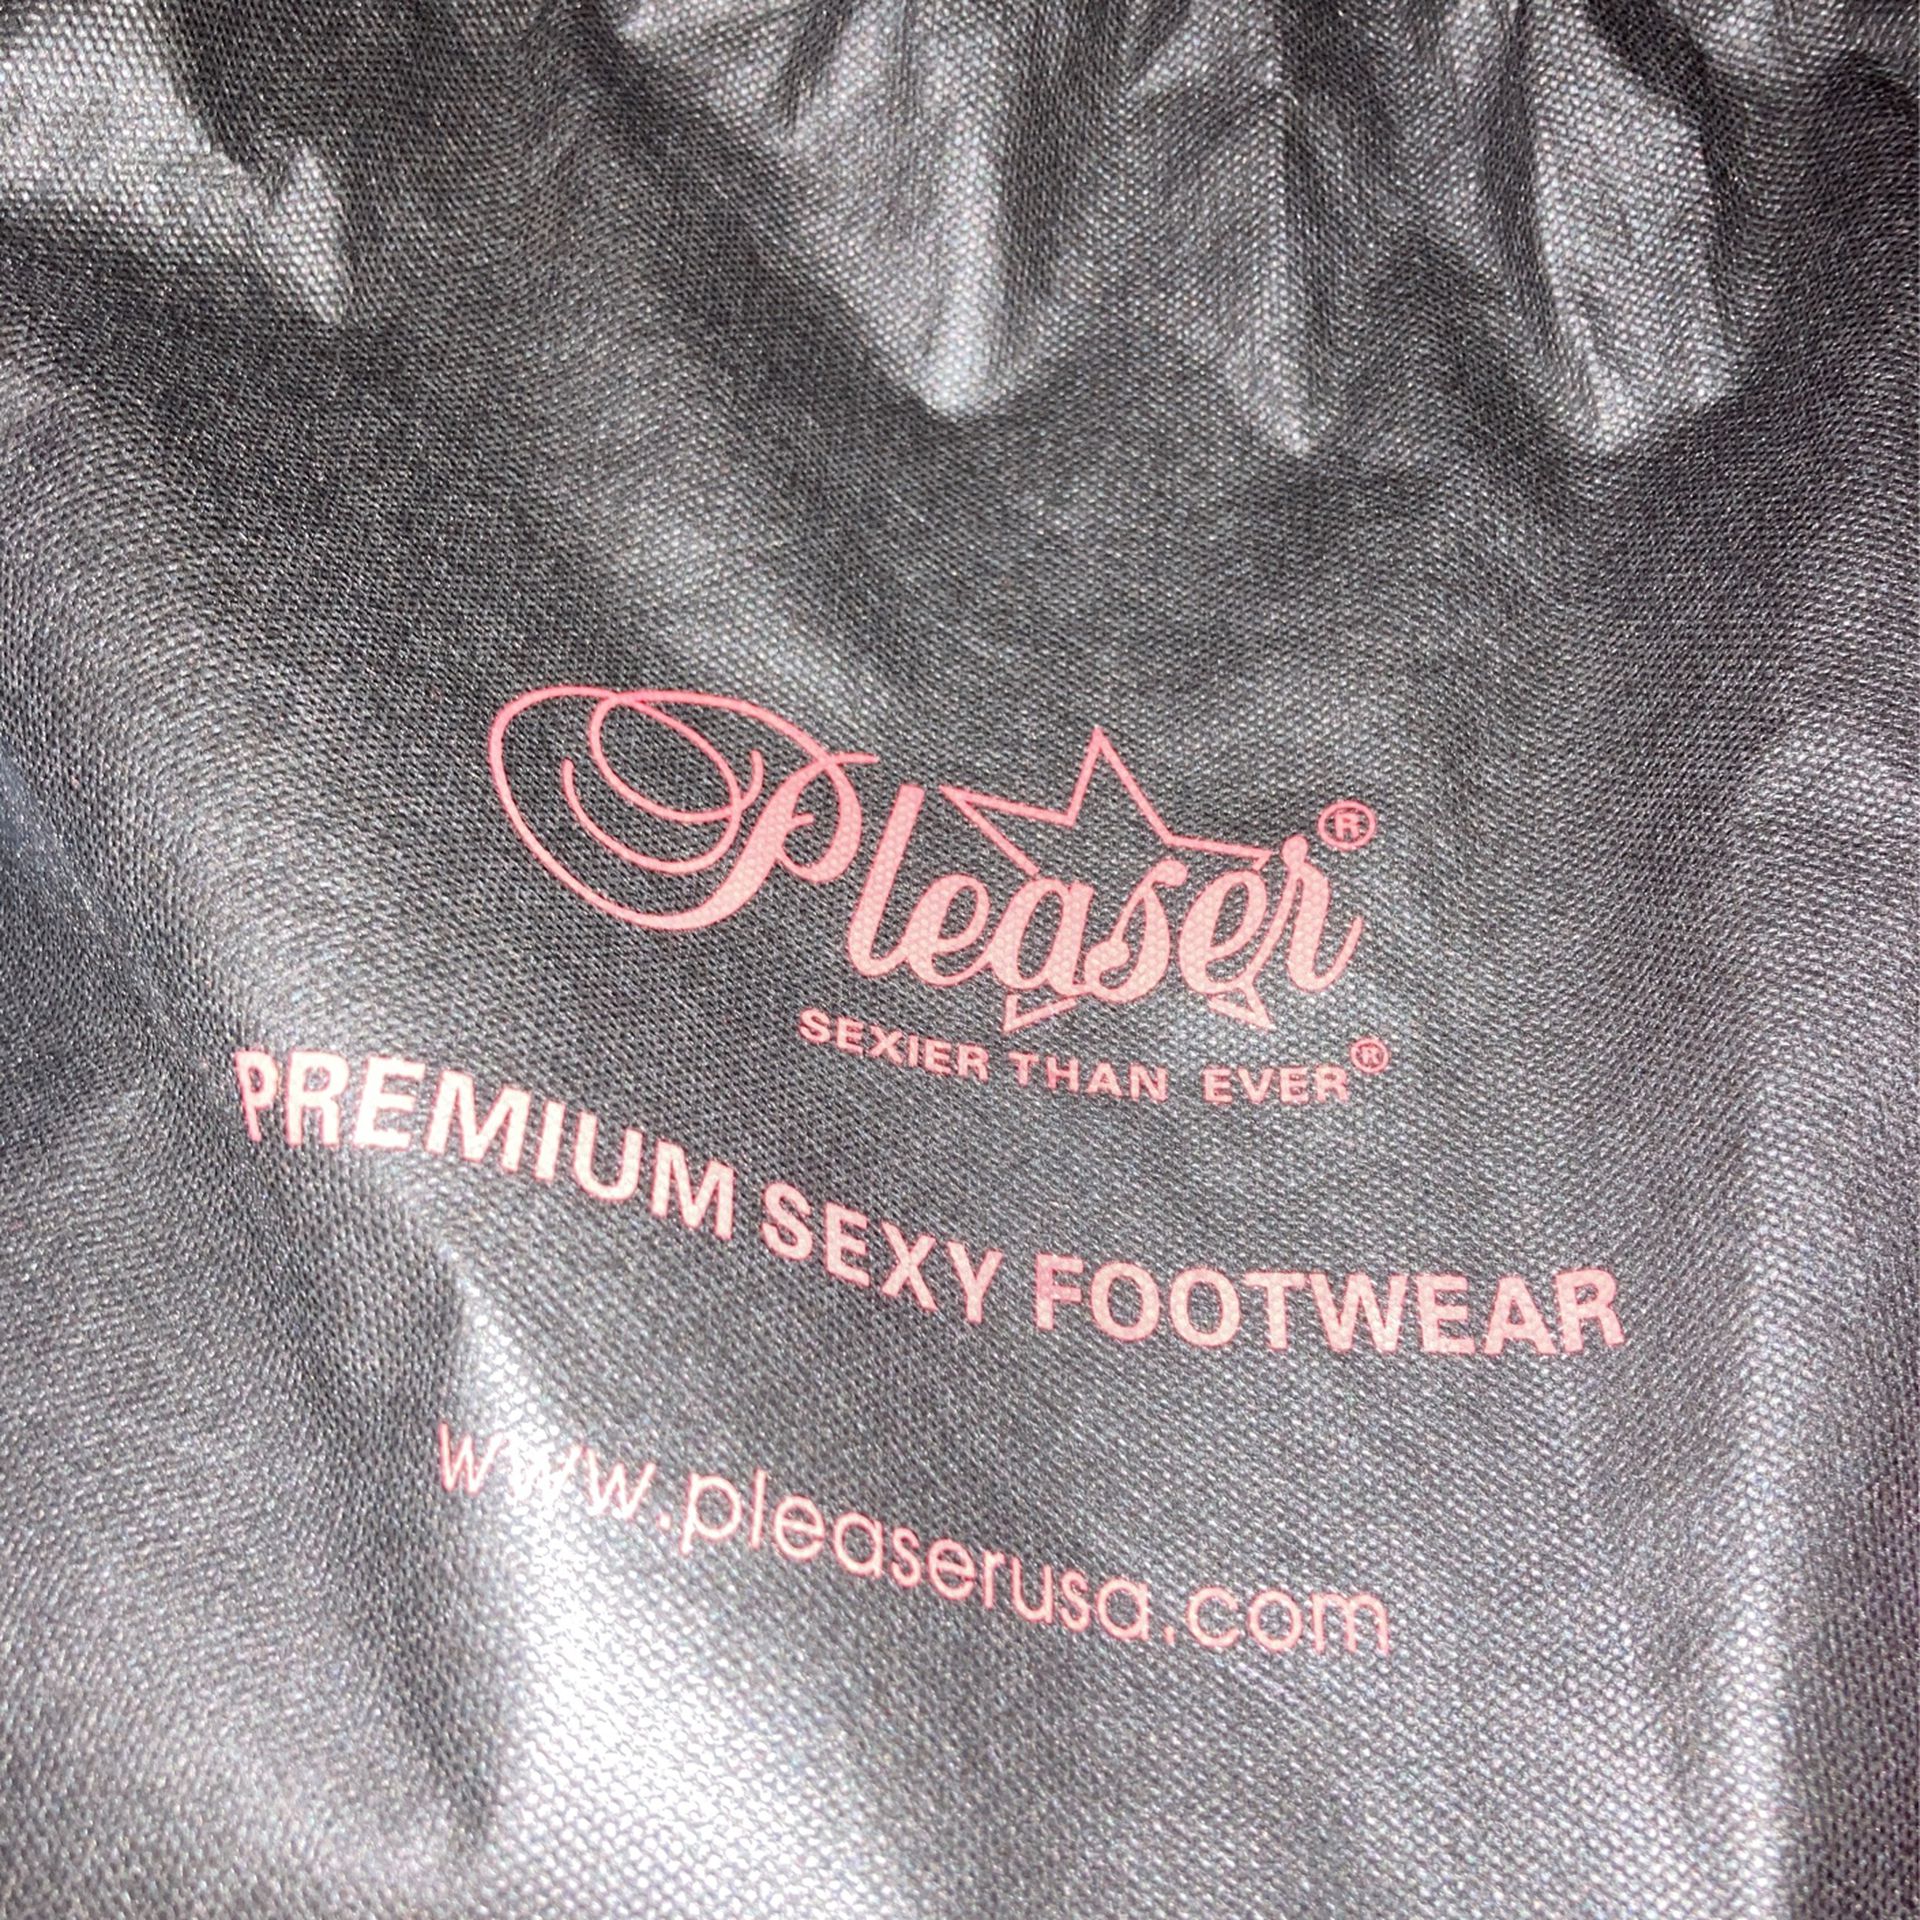 Premium Sexy Footwear 